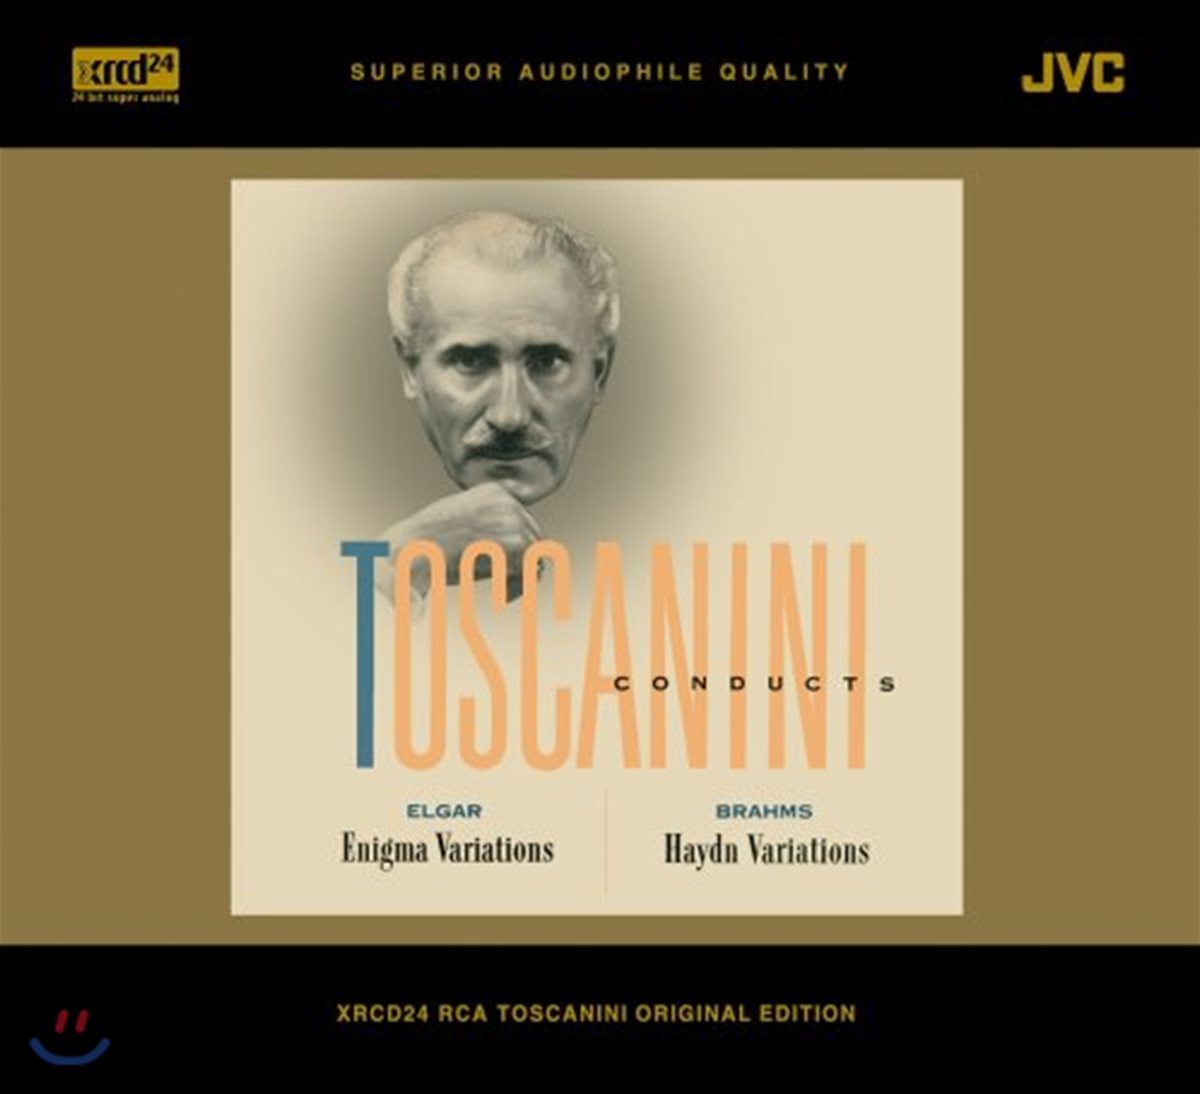 Arturo Toscanini 엘가: 수수께끼 변주곡 / 브람스: 하이든 주제에 의한 변주곡 (Elgar: Enigma Variations / Brahms: Variations on a Theme by Haydn)